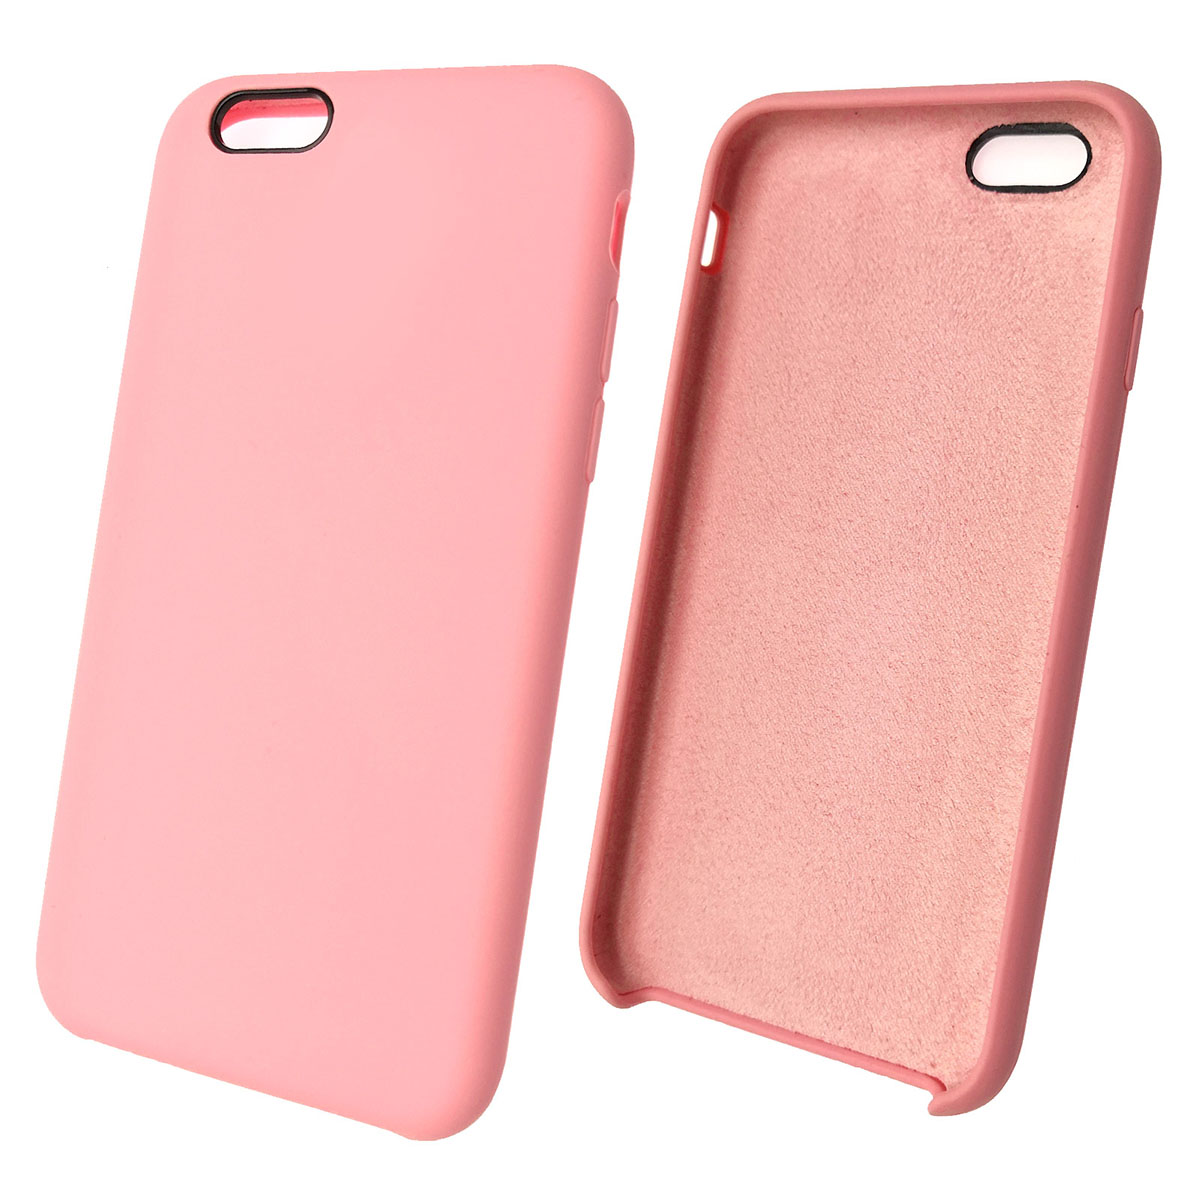 Чехол накладка Silicon Case для APPLE iPhone 6, 6G, 6S, силикон, бархат, цвет светло розовый.